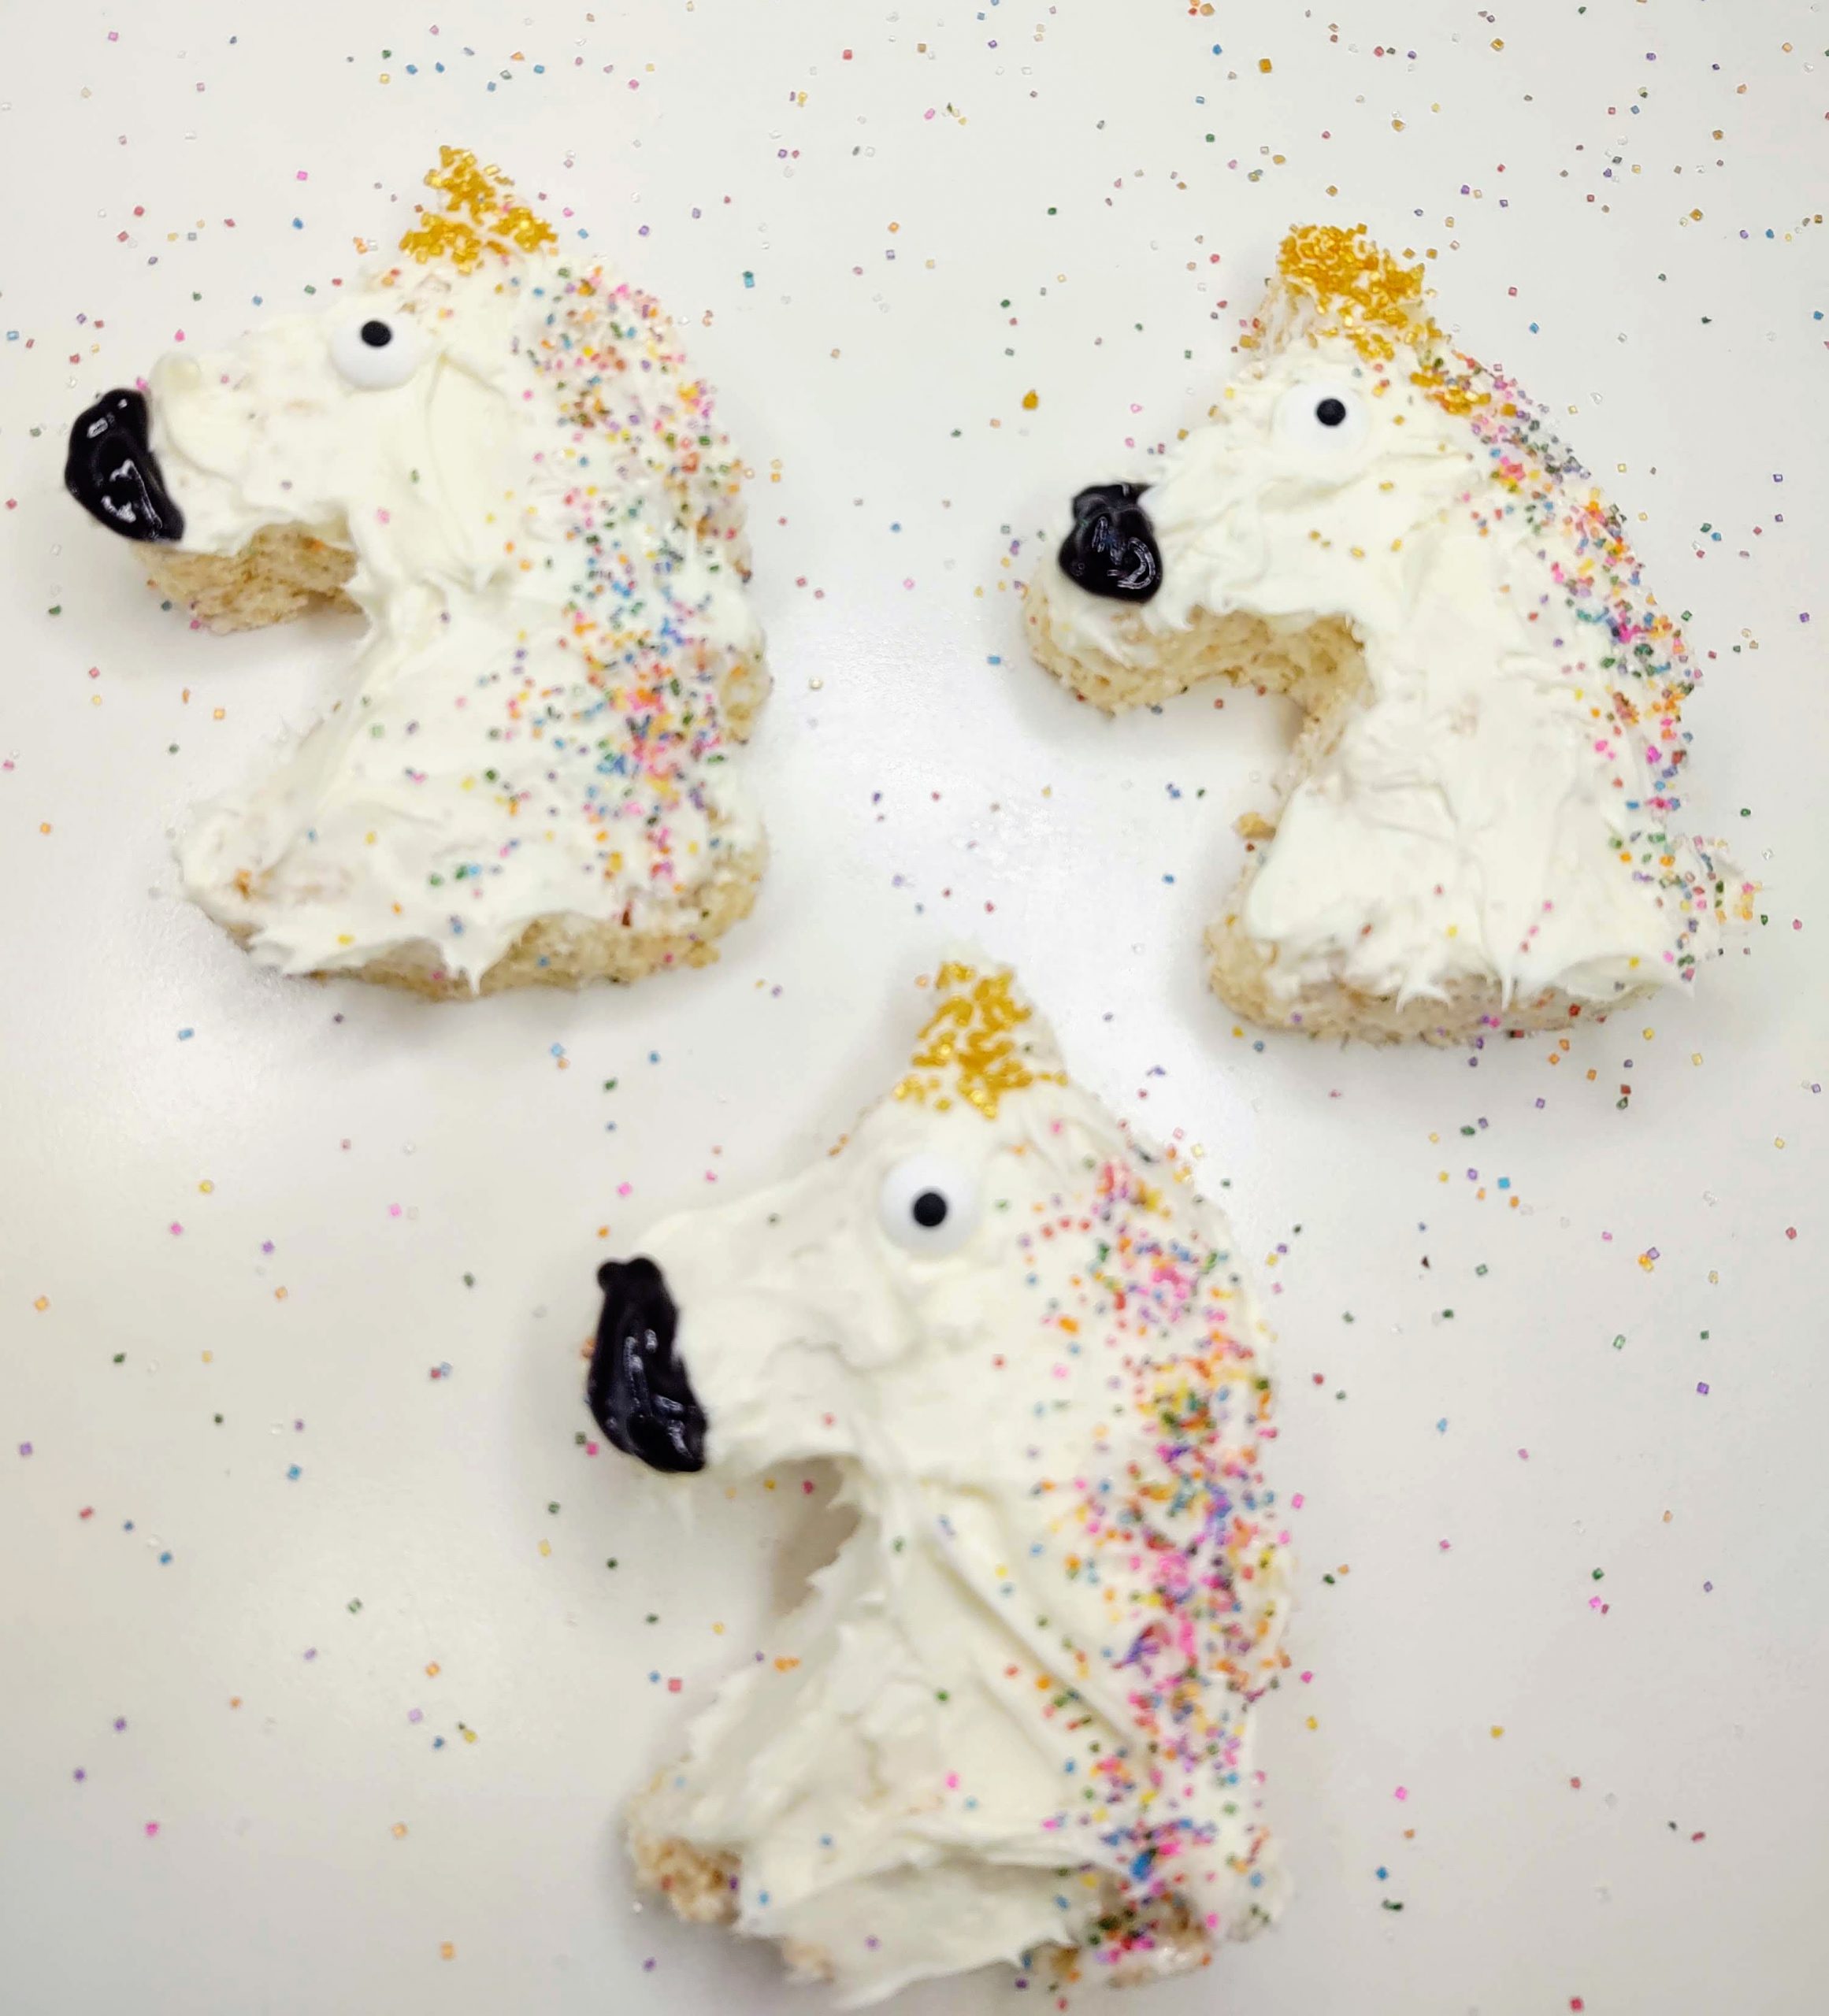 3 fully decorated unicorn rice krispie treats